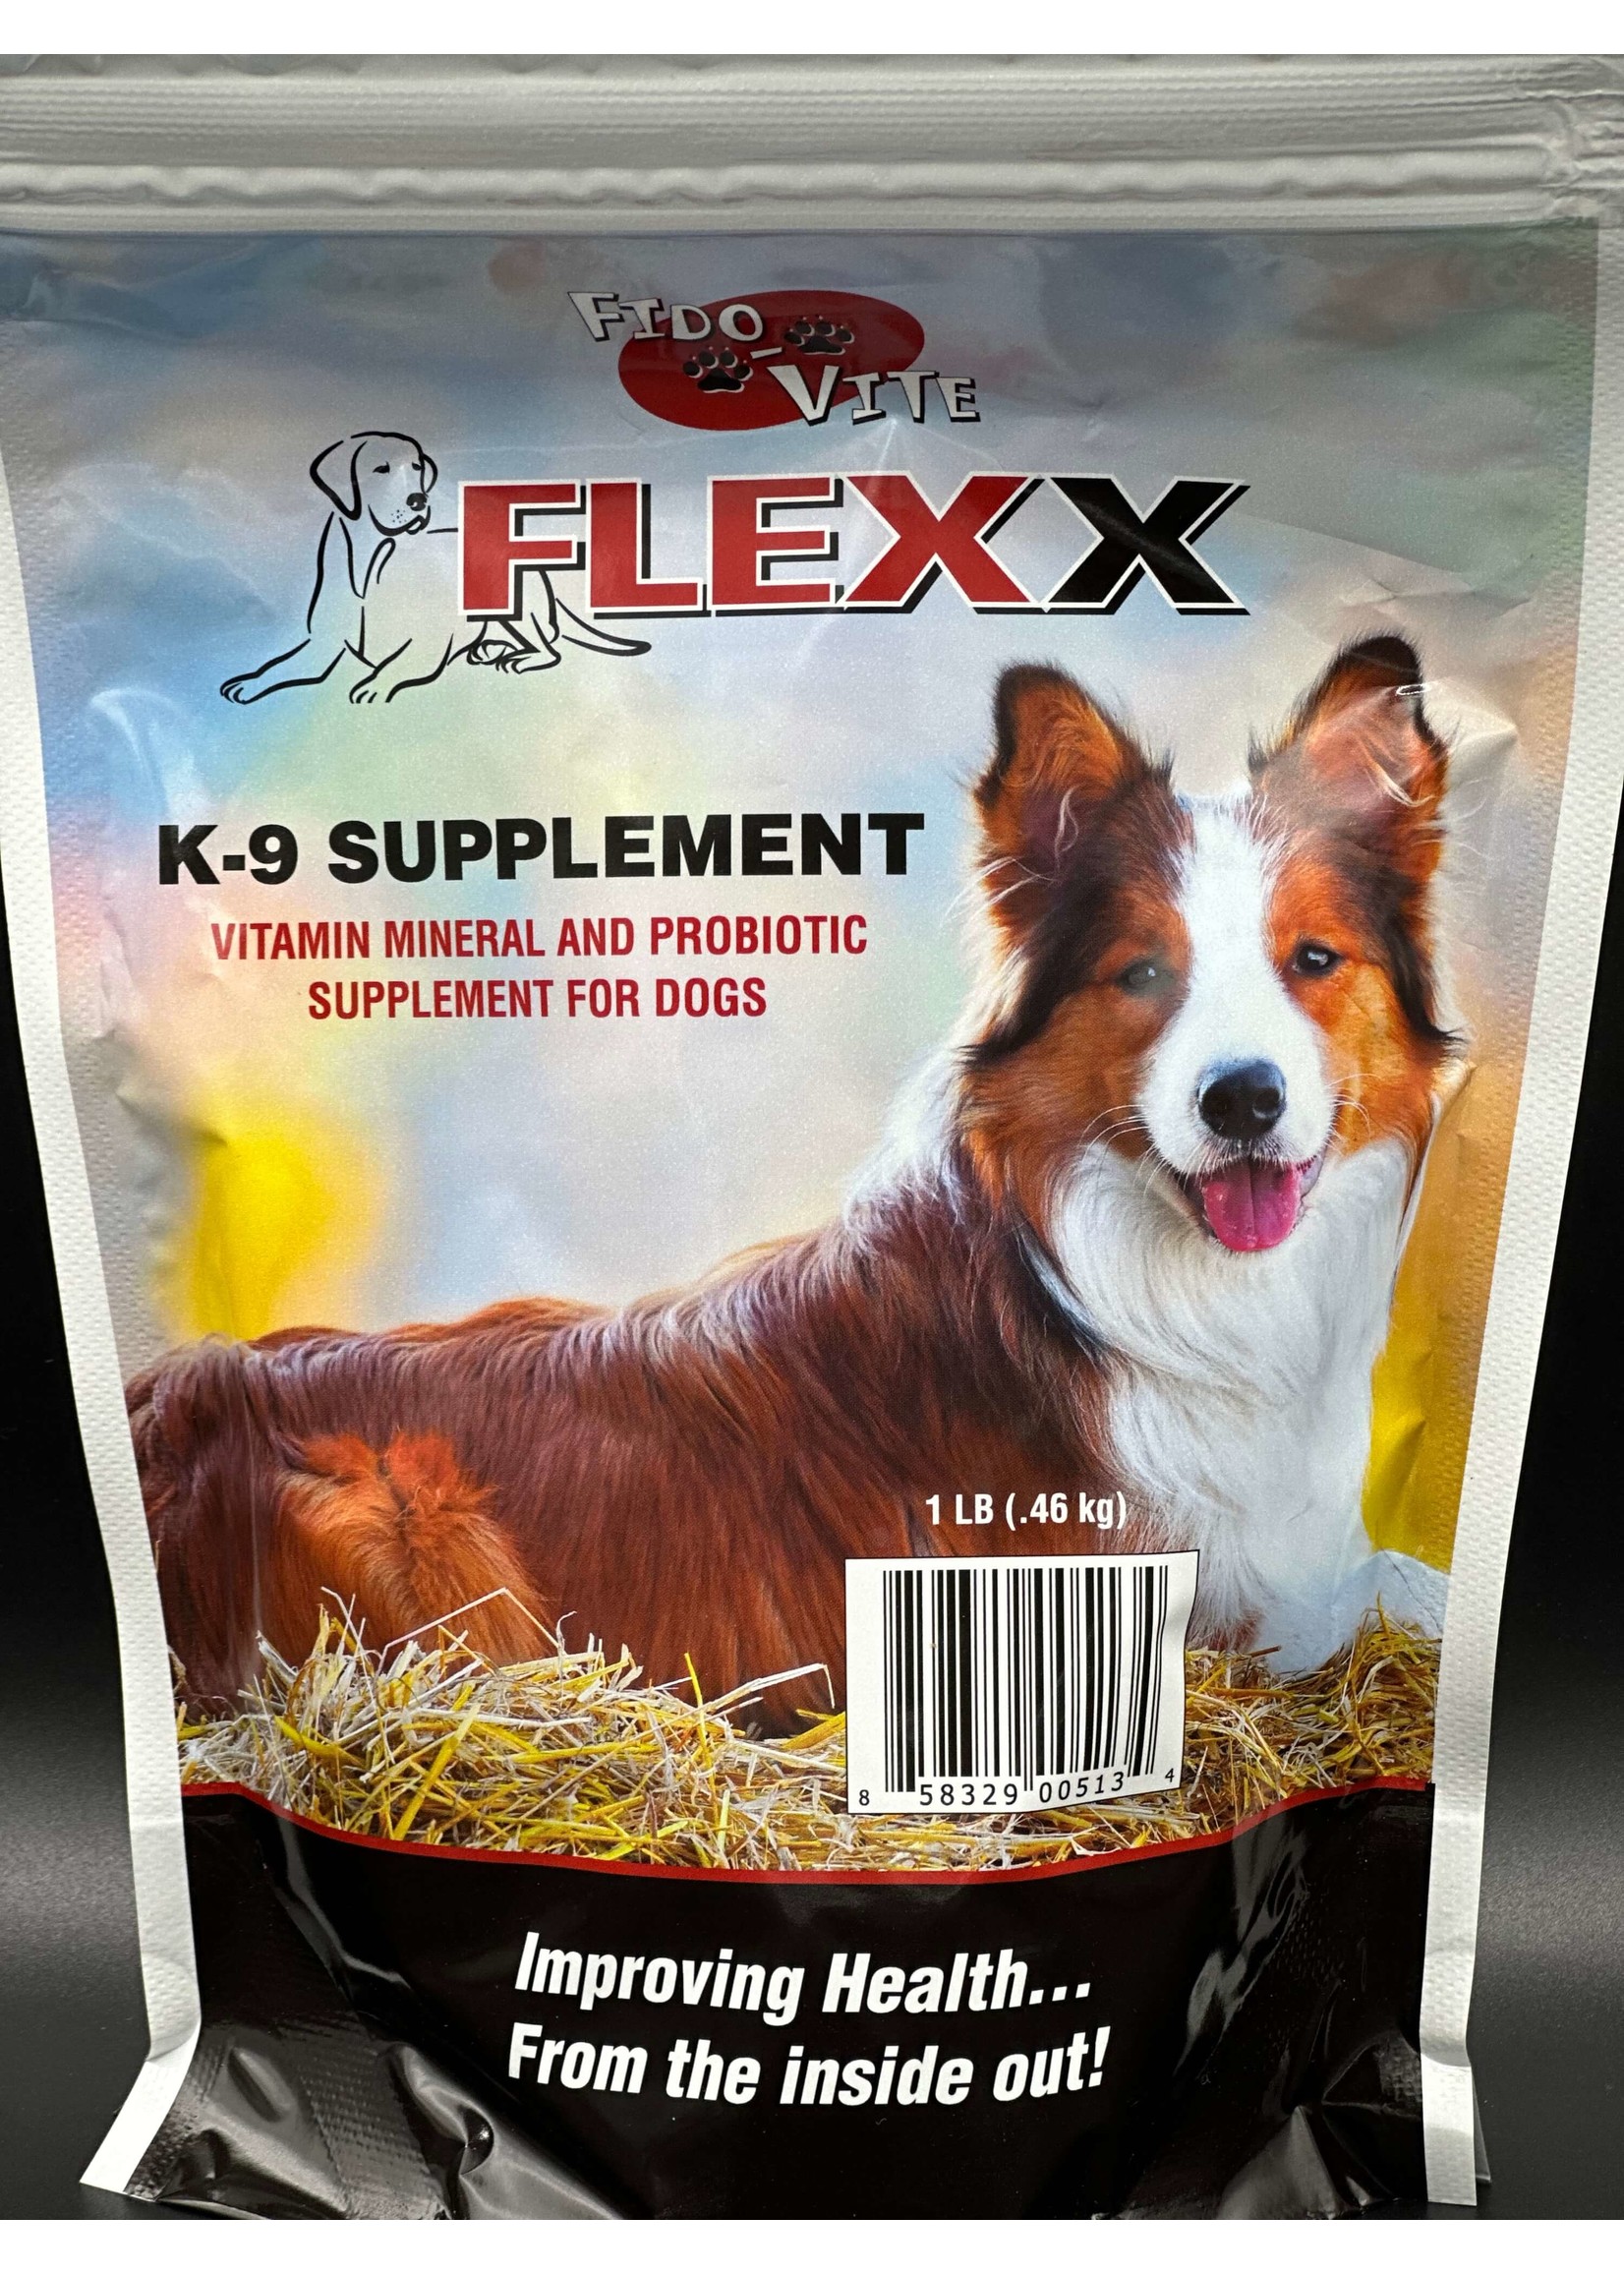 Fido-Vite Flexx K9 Supplement